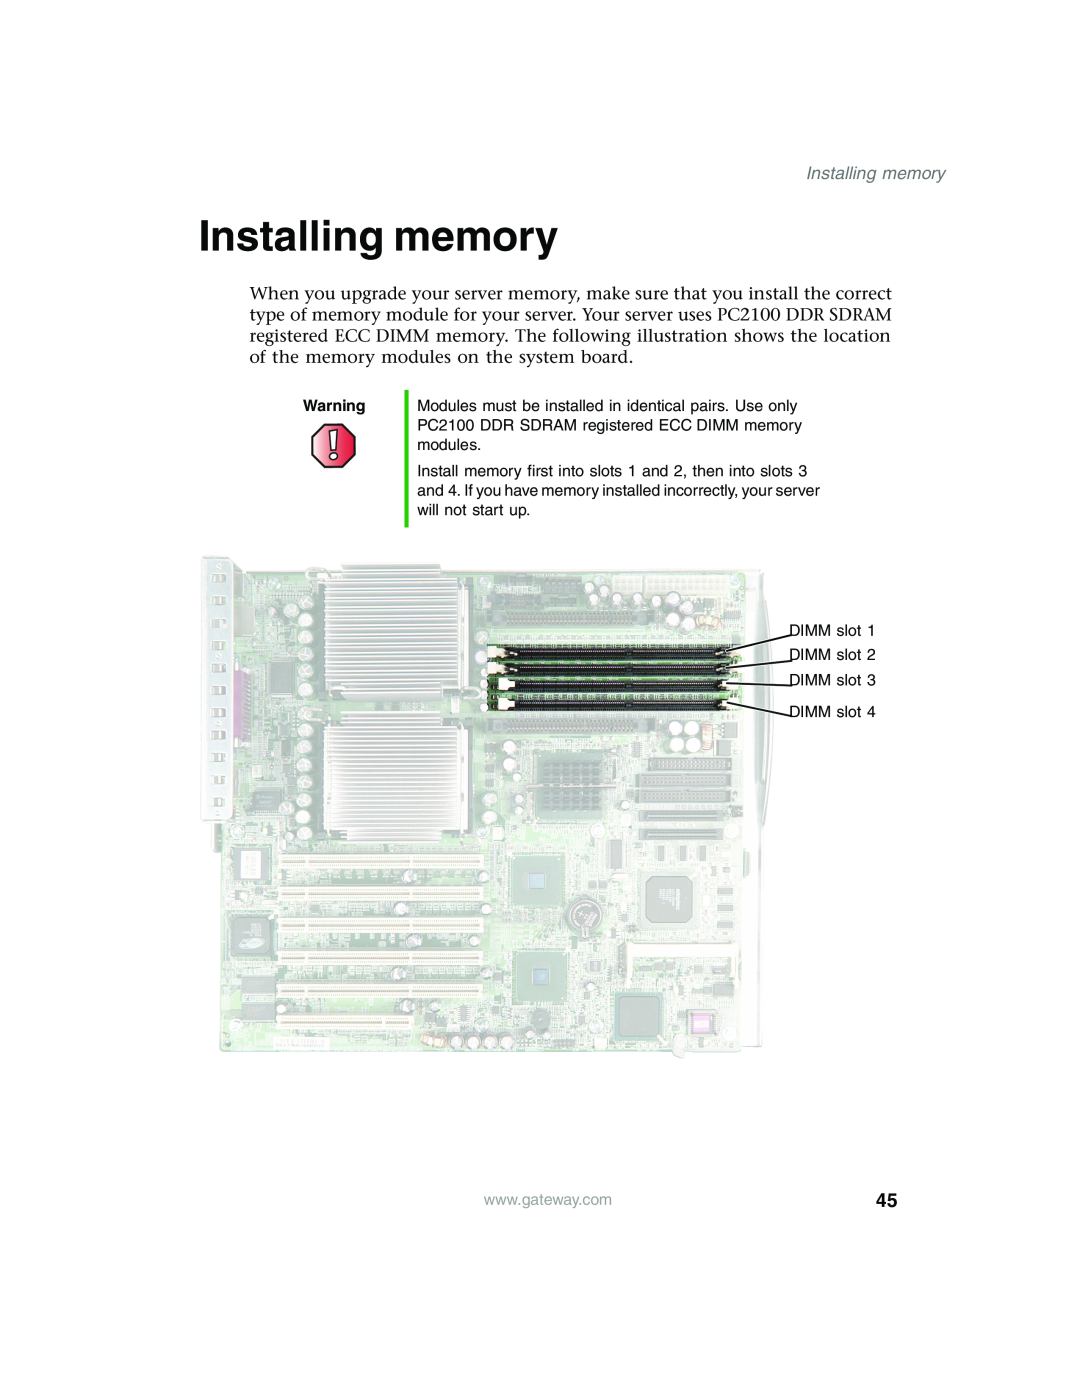 Gateway 980 manual Installing memory 